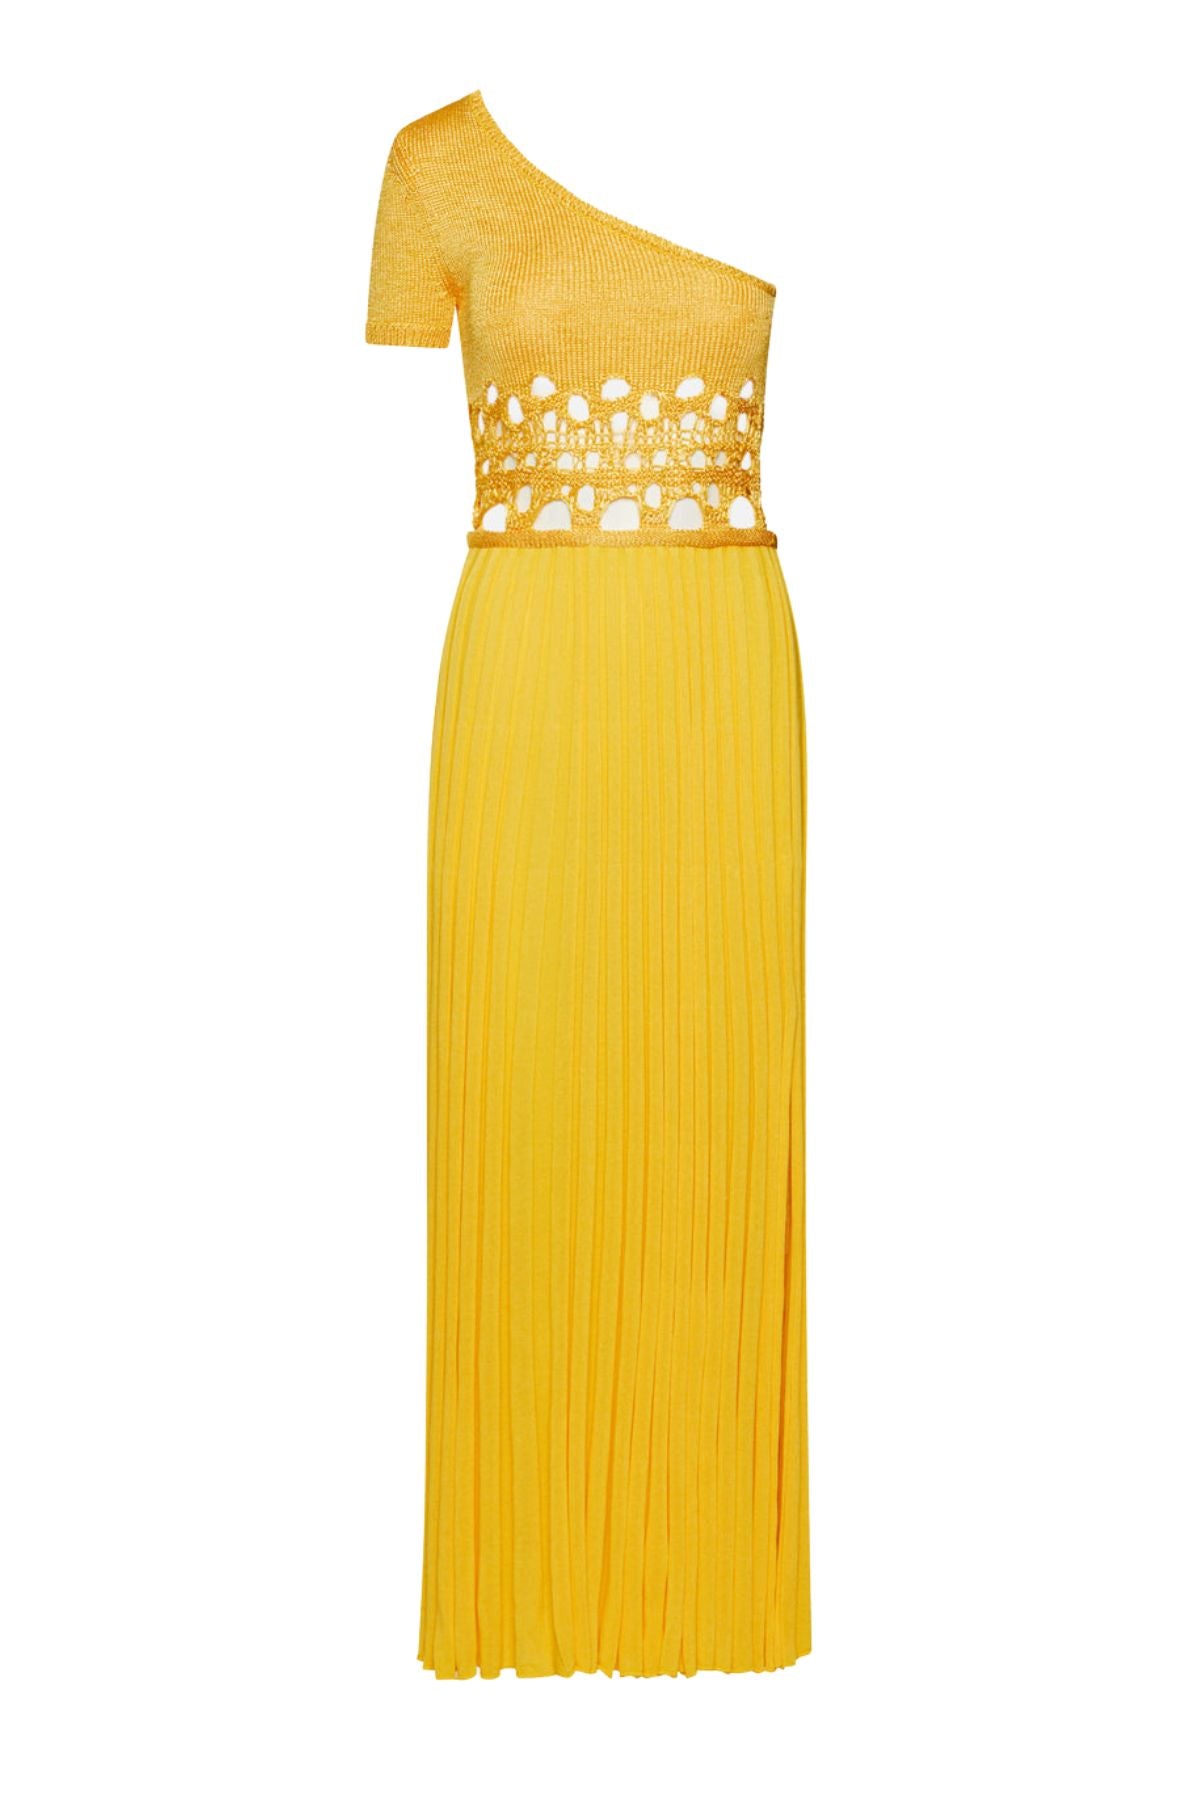 Christopher Esber CHRISTOPHER ESBER Crochet One Shoulder Dress (Yellow) - RRP $970 - USETHISFORWEBSITEPRODUCTChristopherEsber.jpg